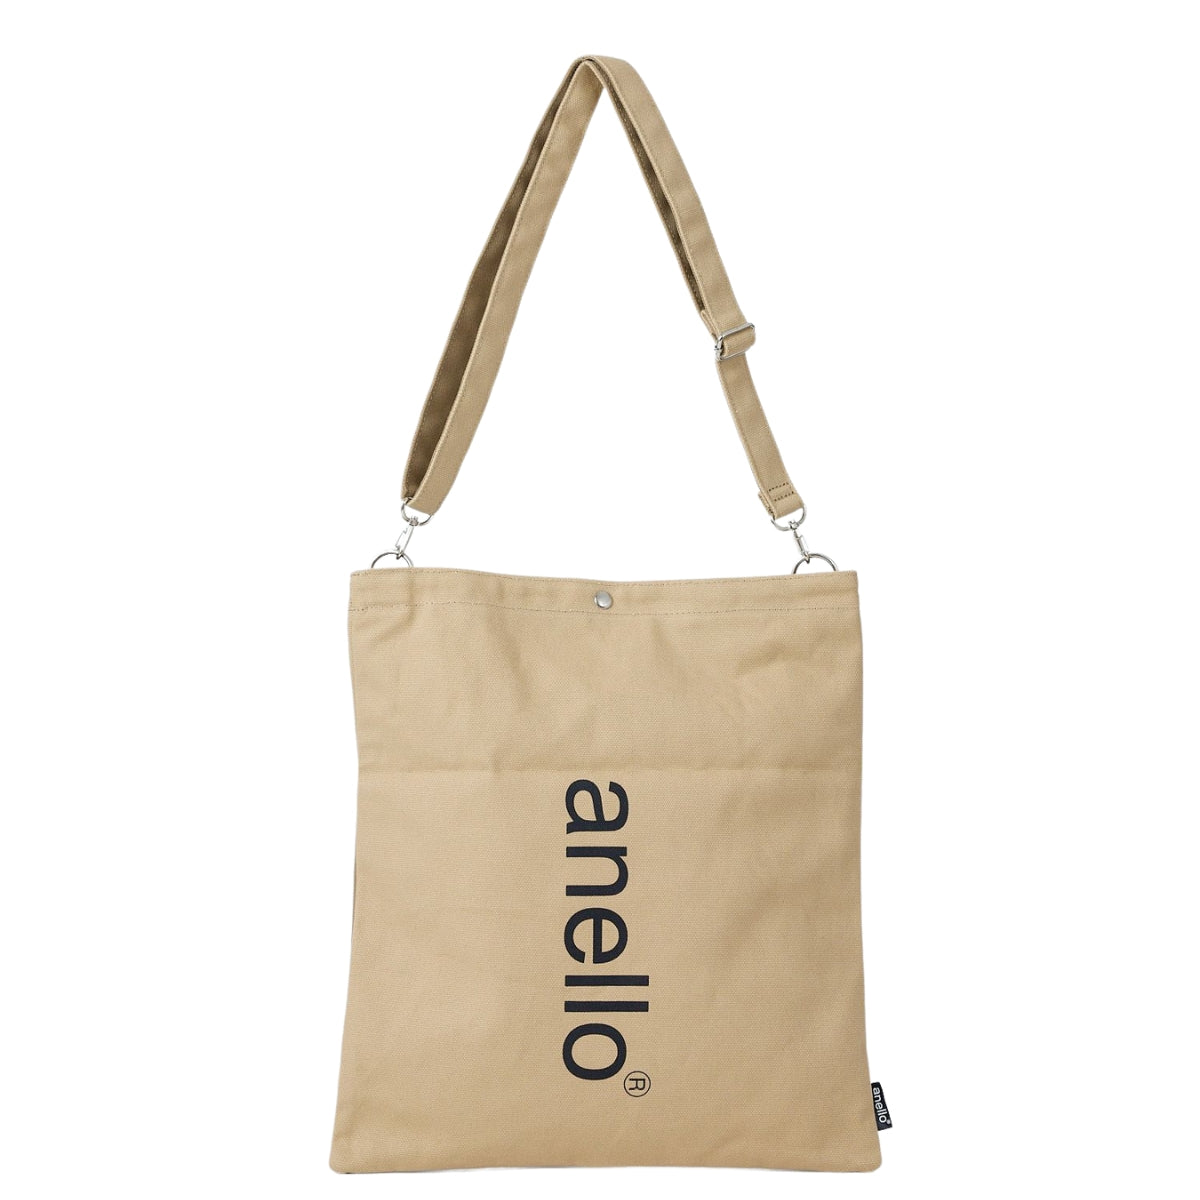 Anello Hello 3 Way Shoulder Bag in Beige